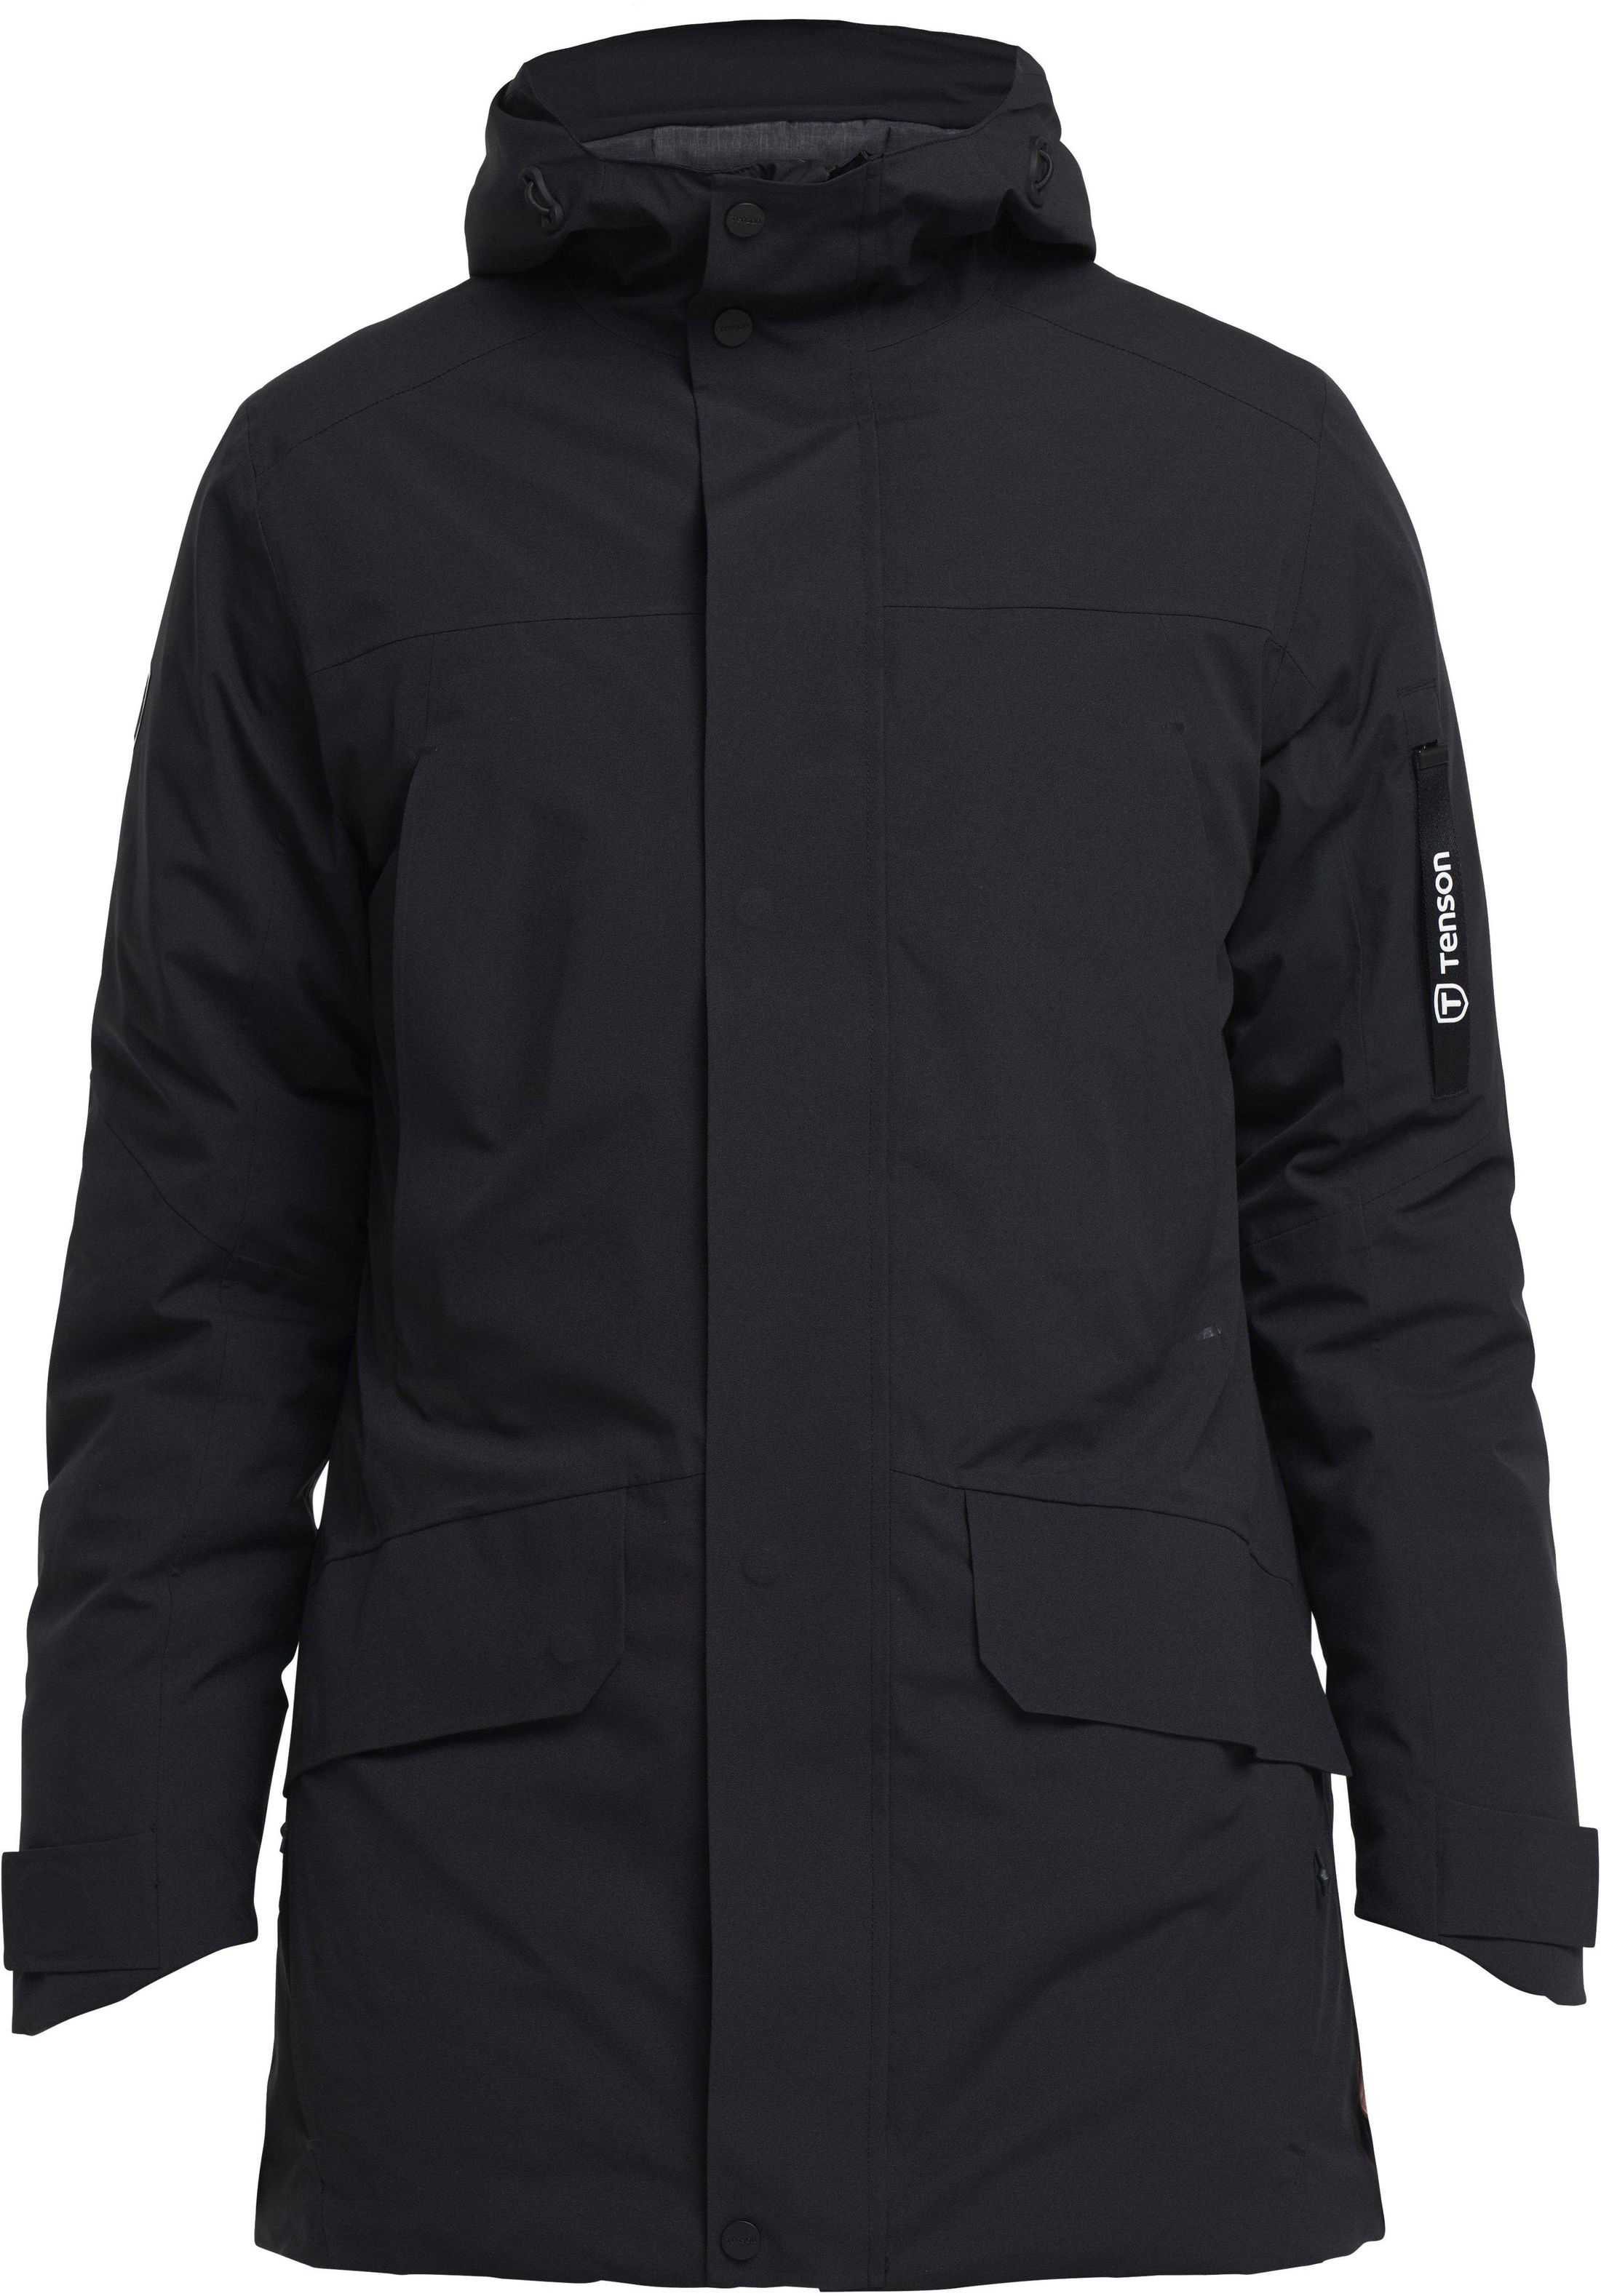 Tenson Himalaya Vision MPC Jacket Black size M